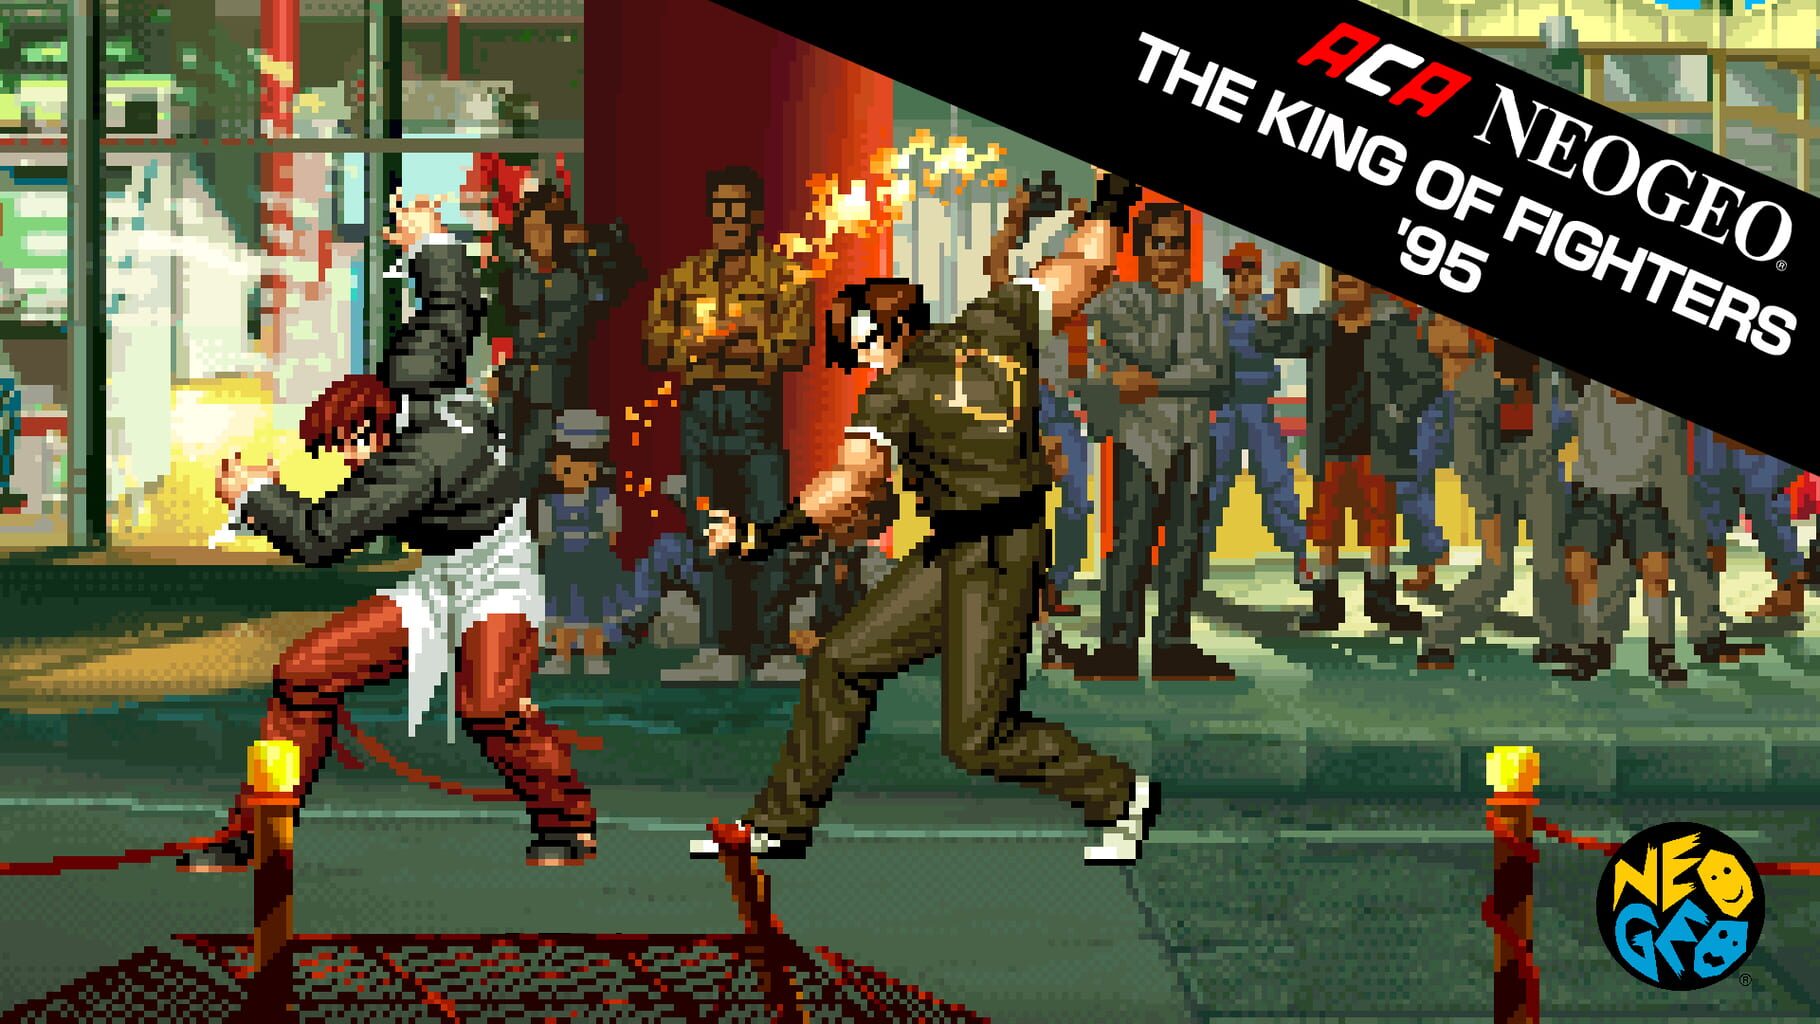 ACA Neo Geo: The King of Fighters '95 artwork